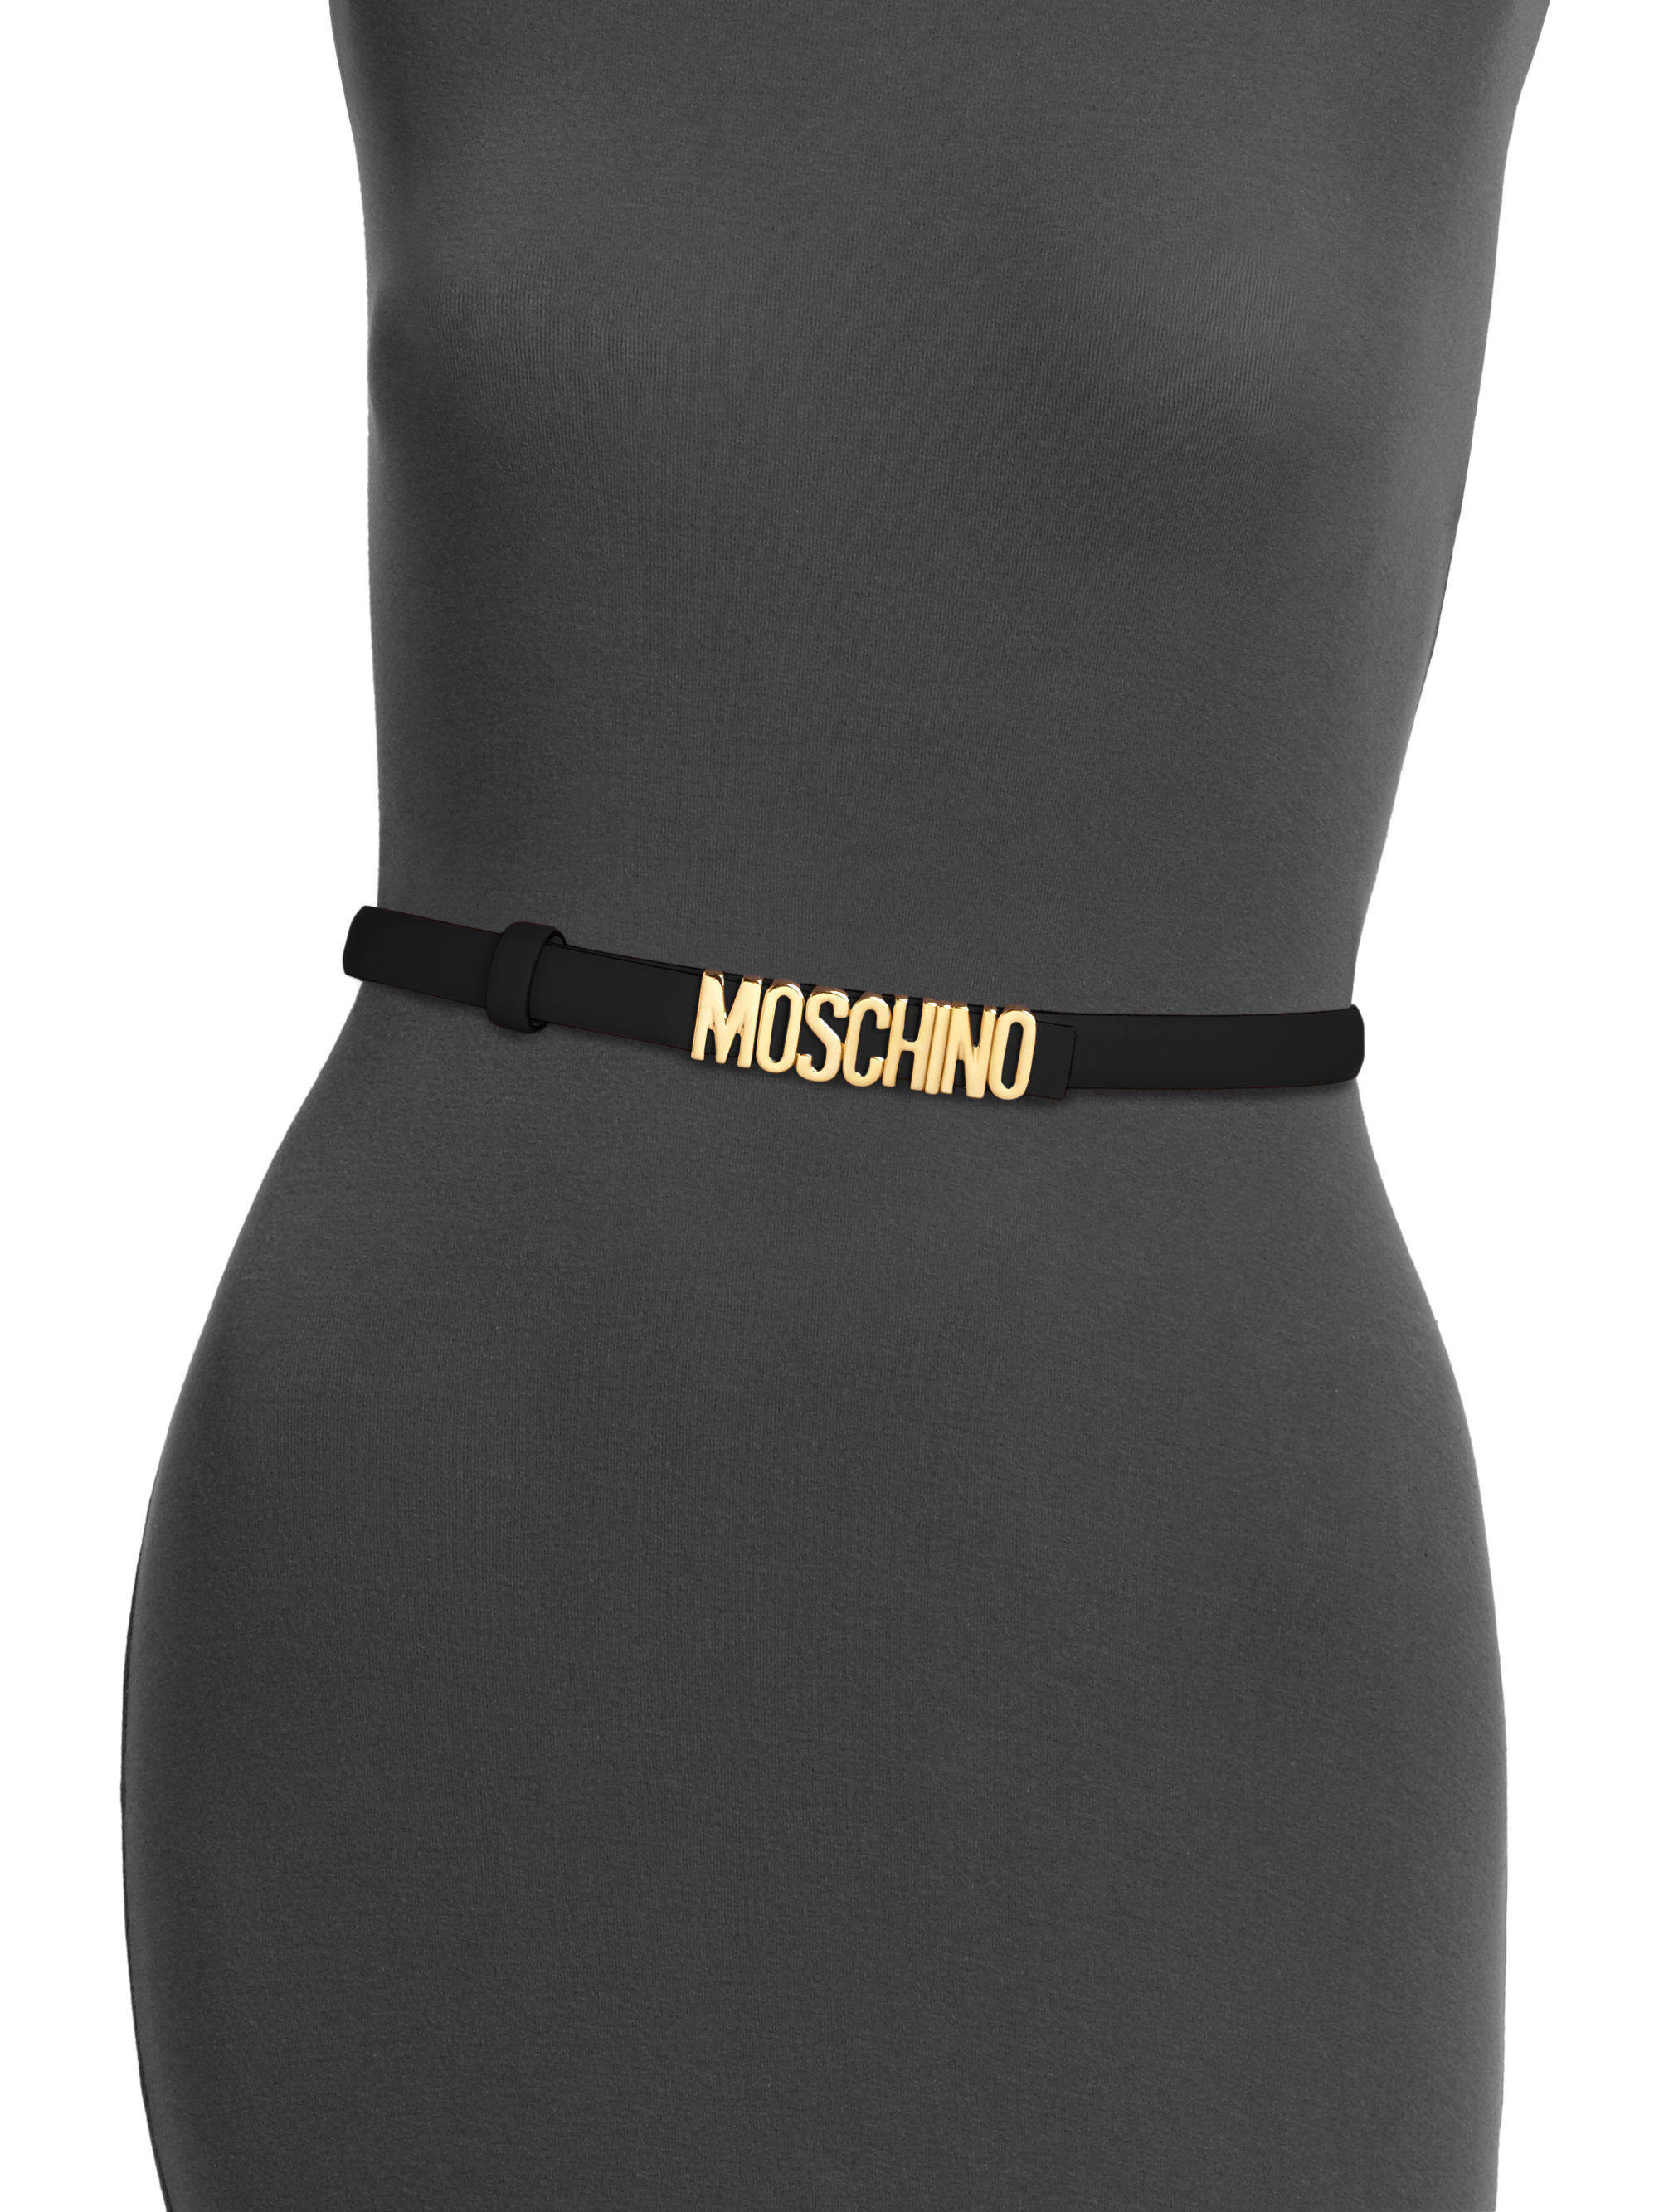 Moschino Skinny Leather Logo Belt in 